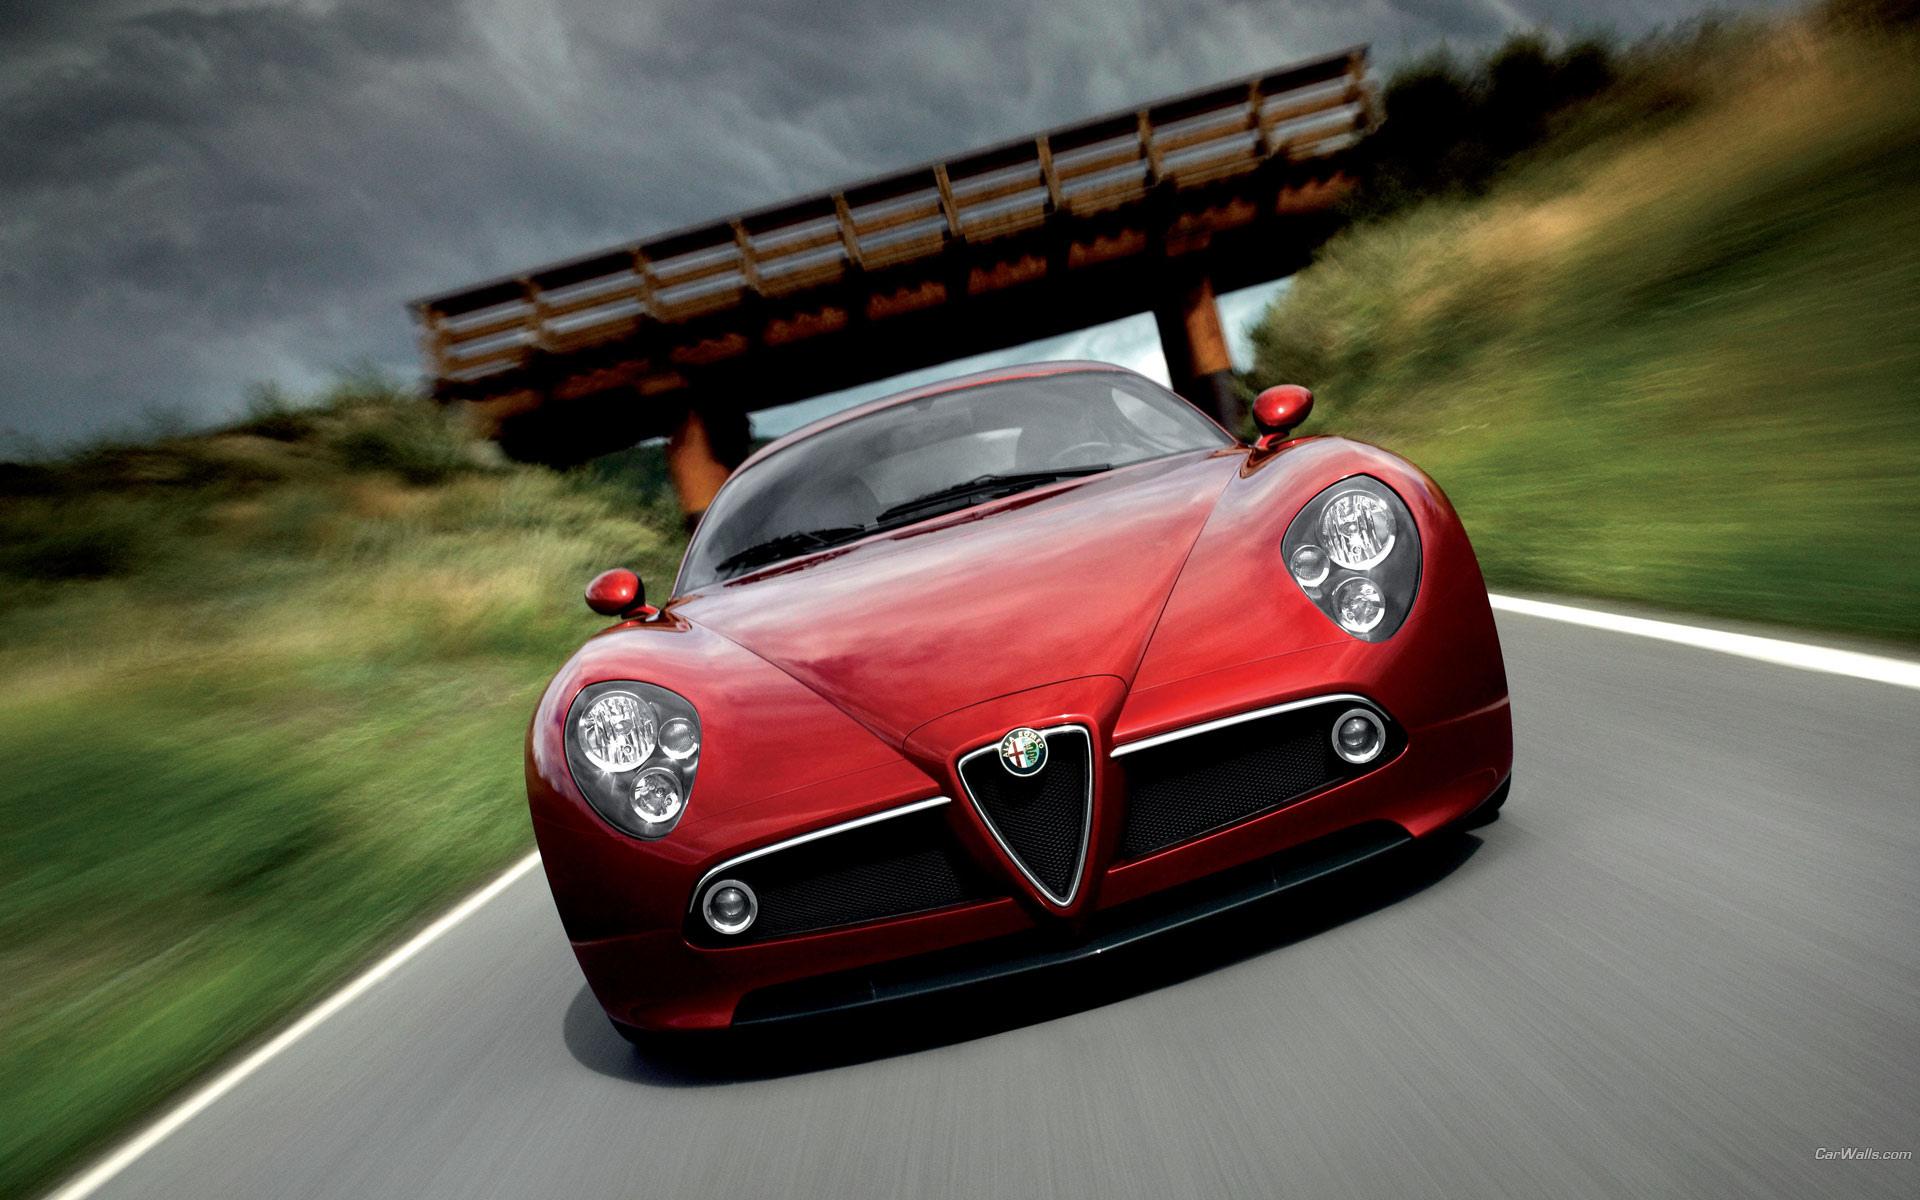 Alfa Romeo 8C Competizione at 1280 x 960 size wallpapers HD quality